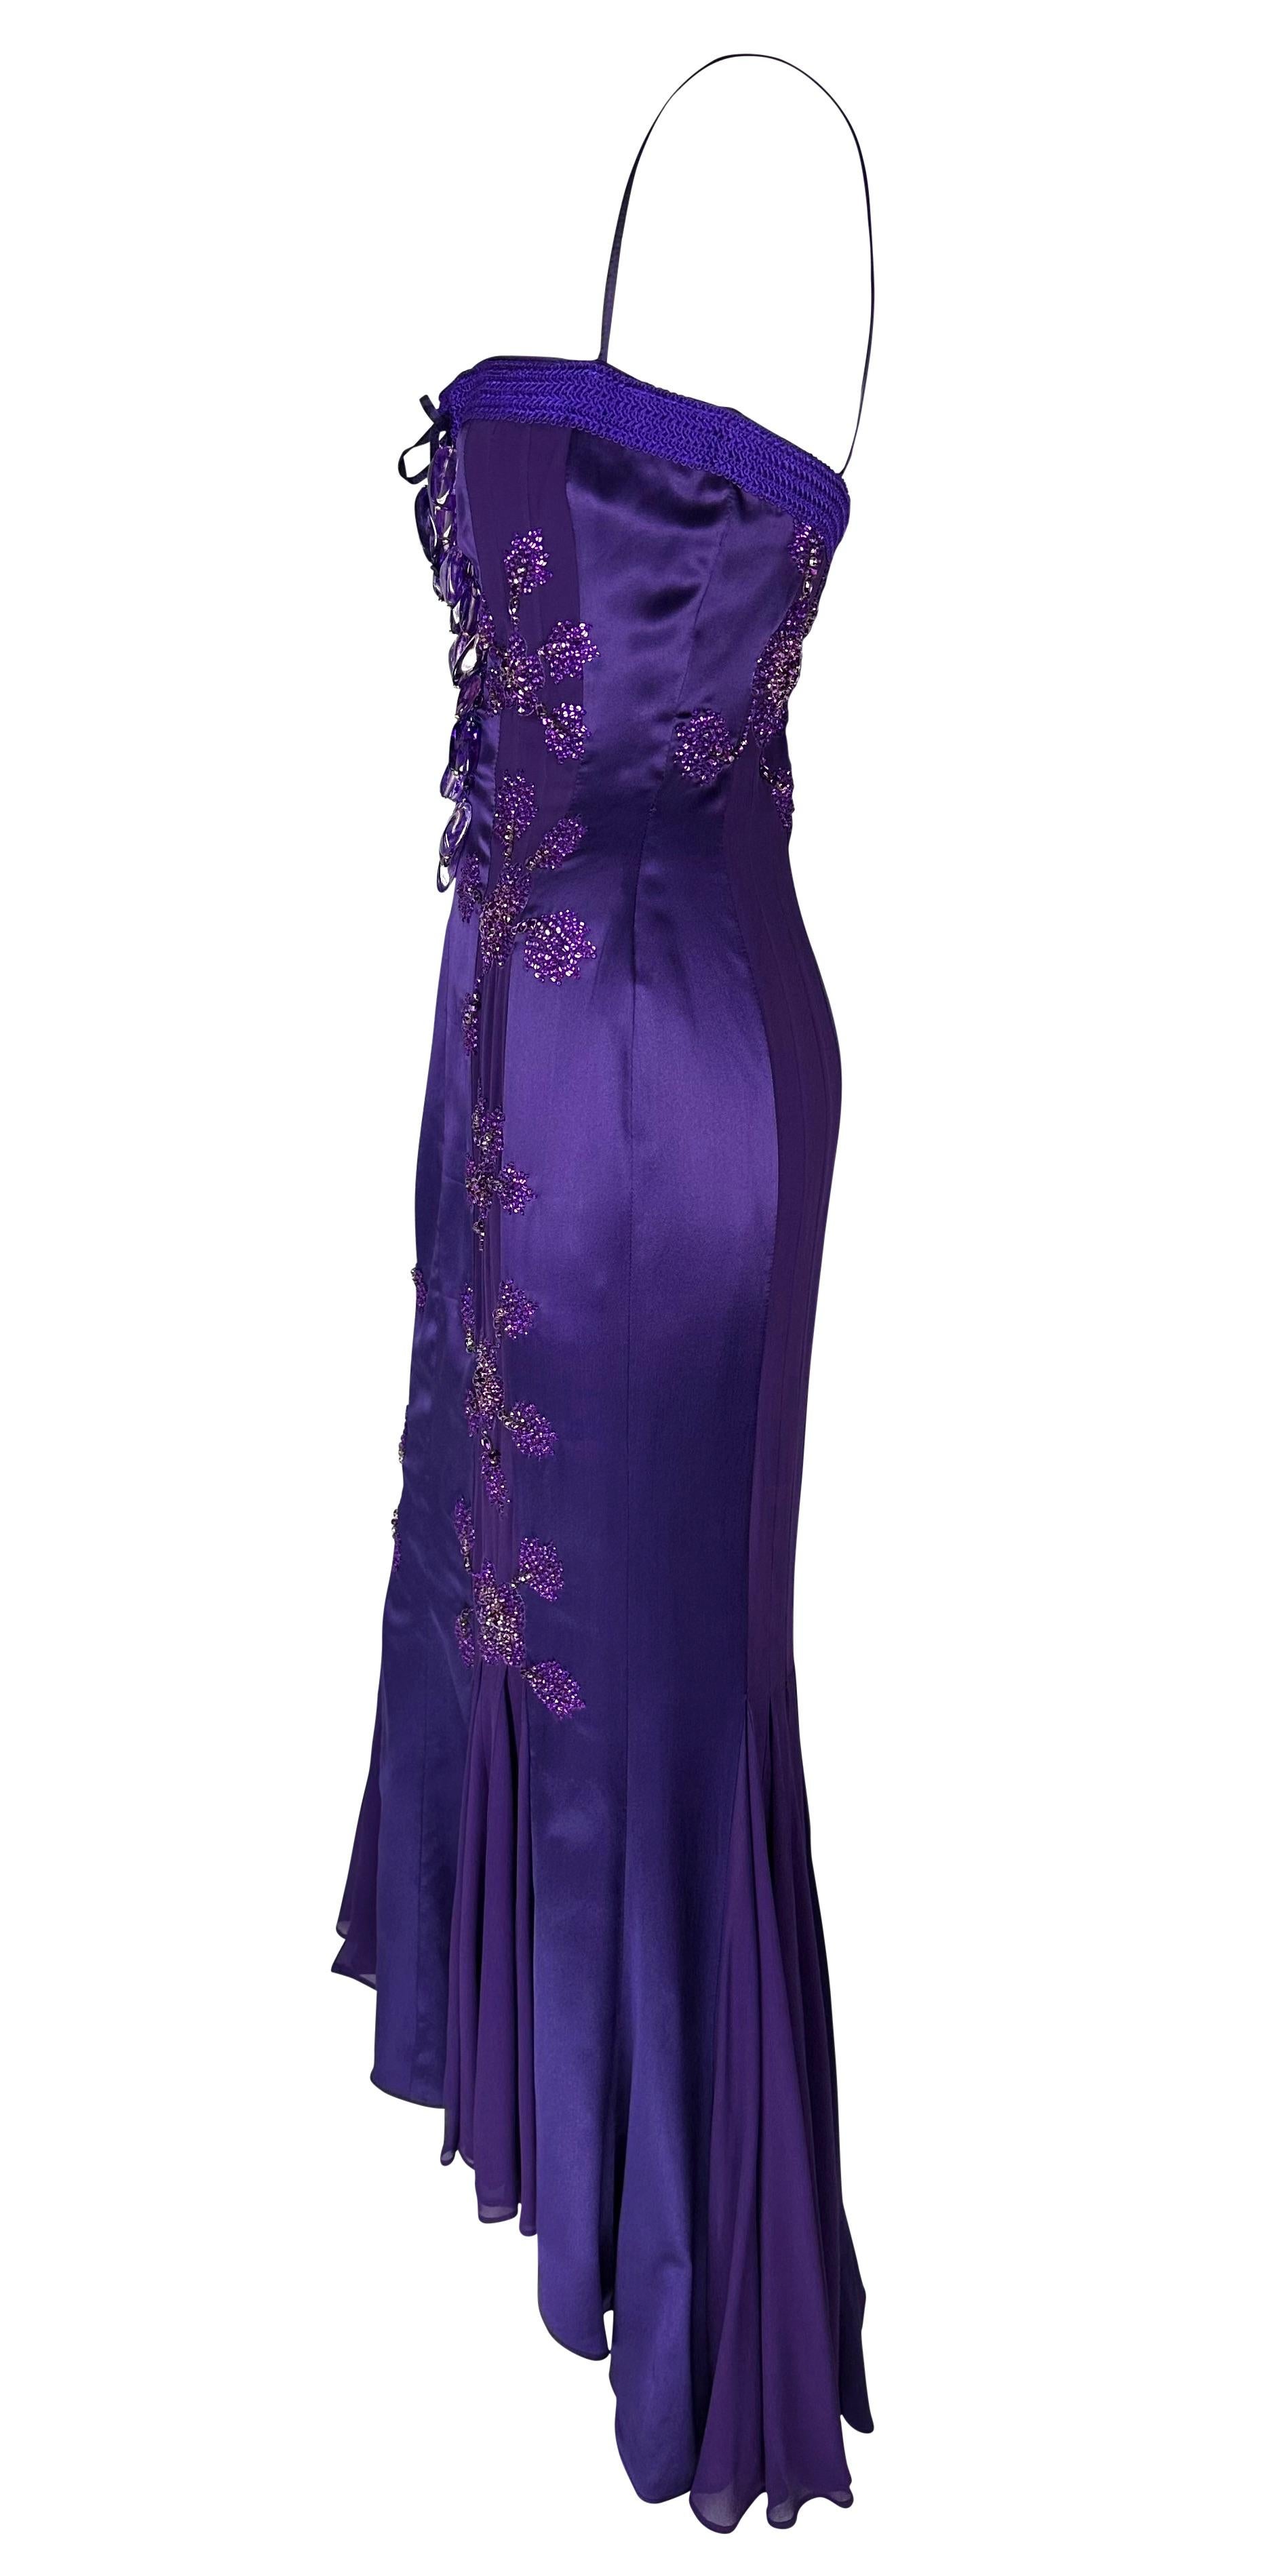 S/S 2005 Emanuel Ungaro by Giambattista Valli Rhinestone Purple Lace-Up Gown For Sale 6